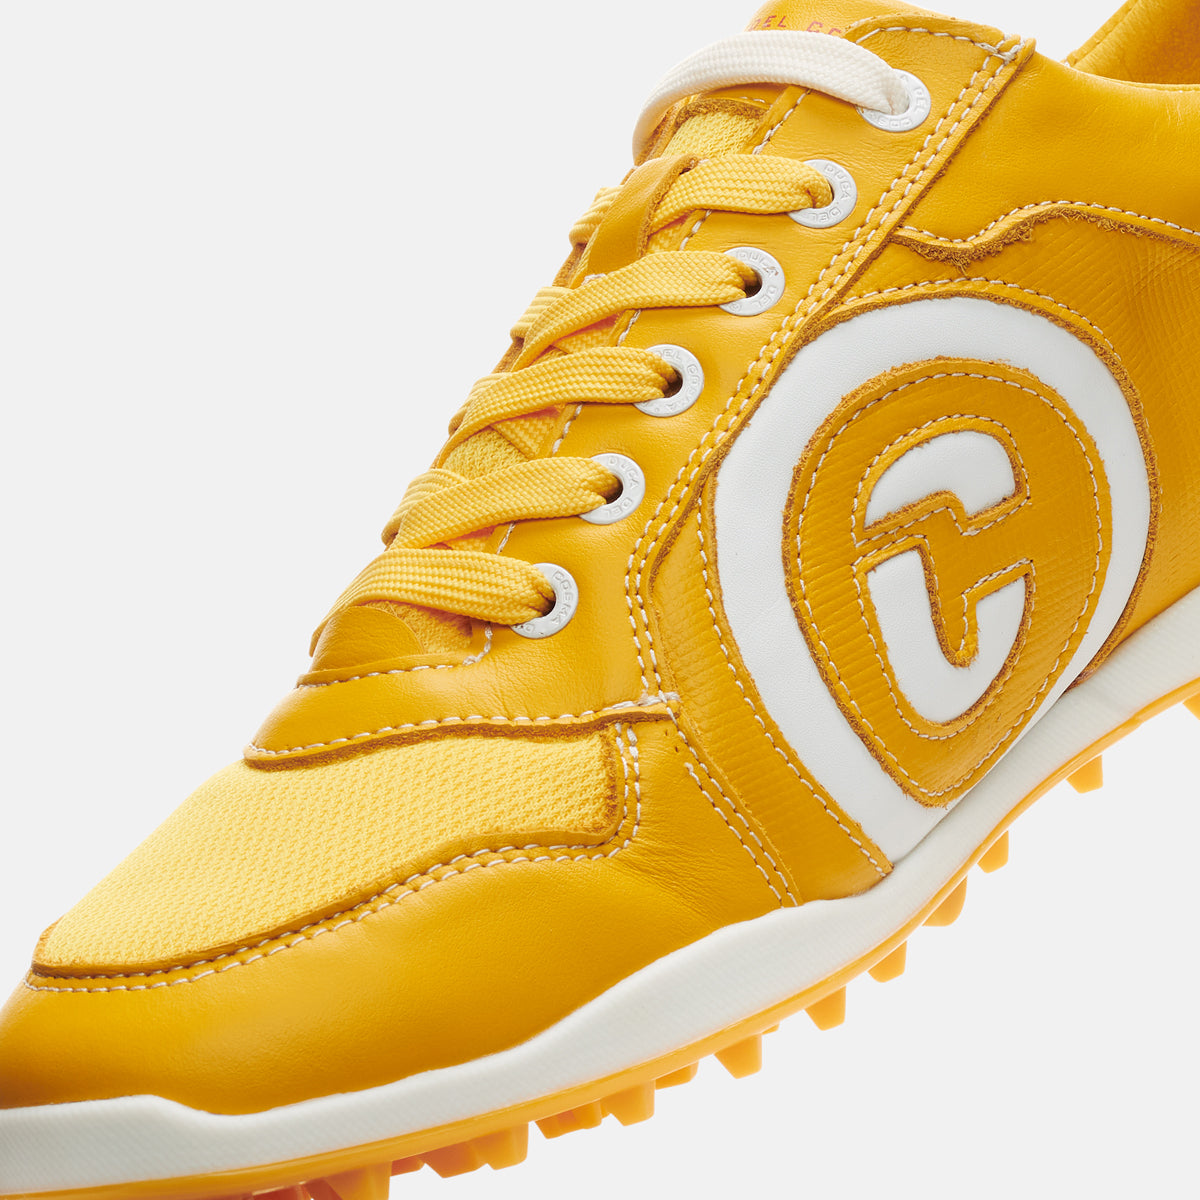 Kuba 2.0 yellow golf shoe for men's fully waterproof durable and comfortable